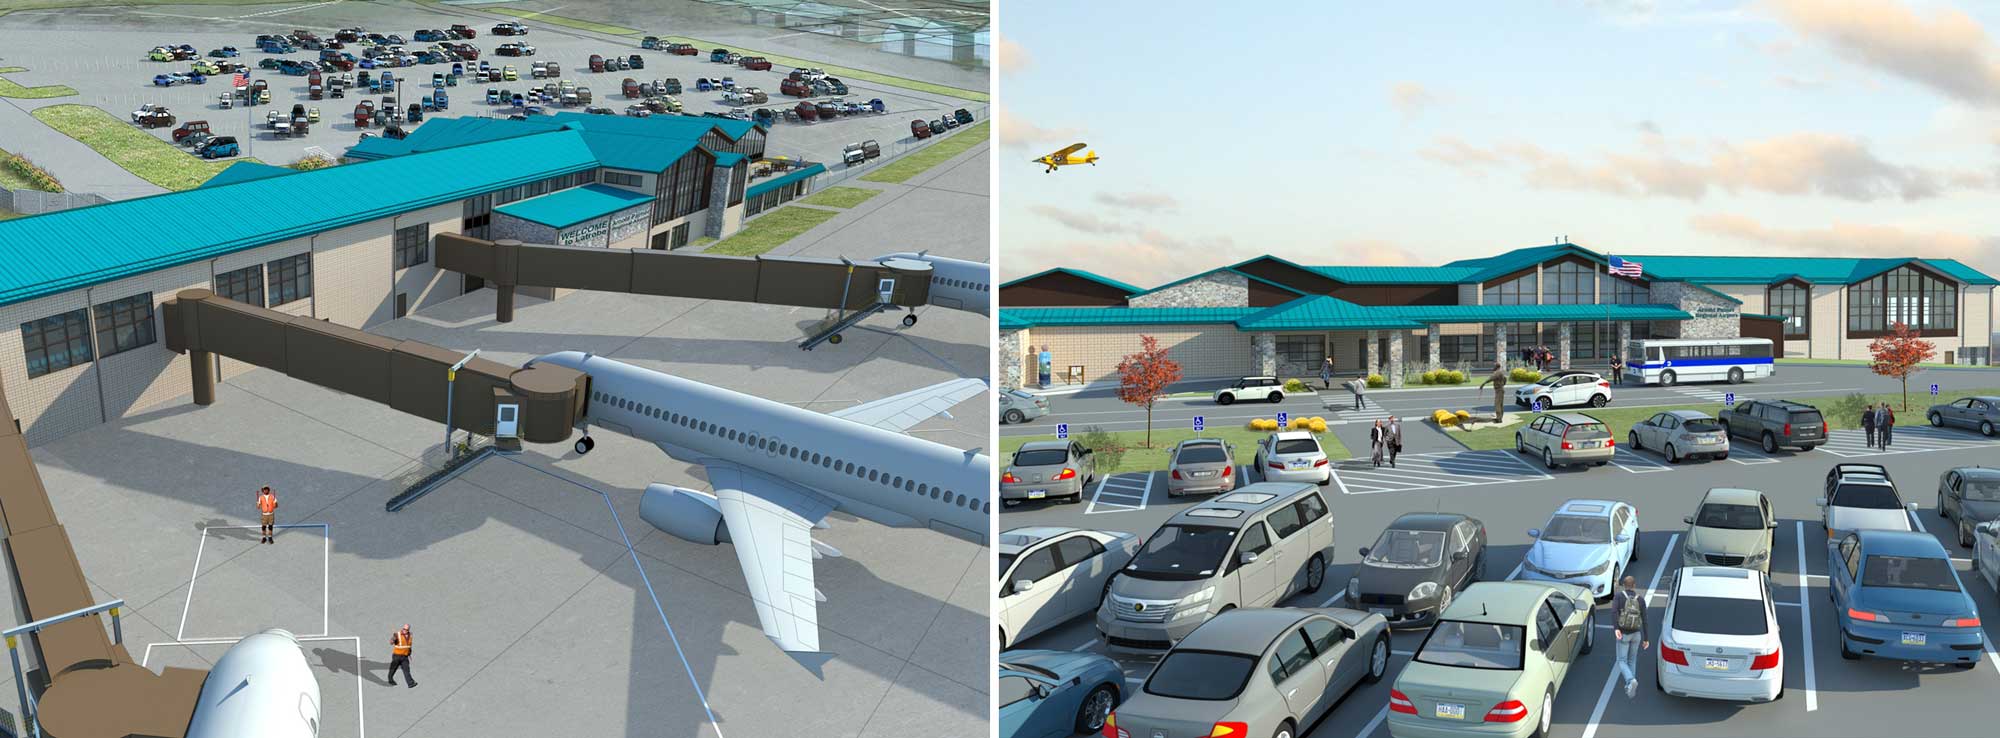 APRA ARNOLD PALMER REGIONAL AIRPORT NEW CORPORATE HANGAR BUILDING